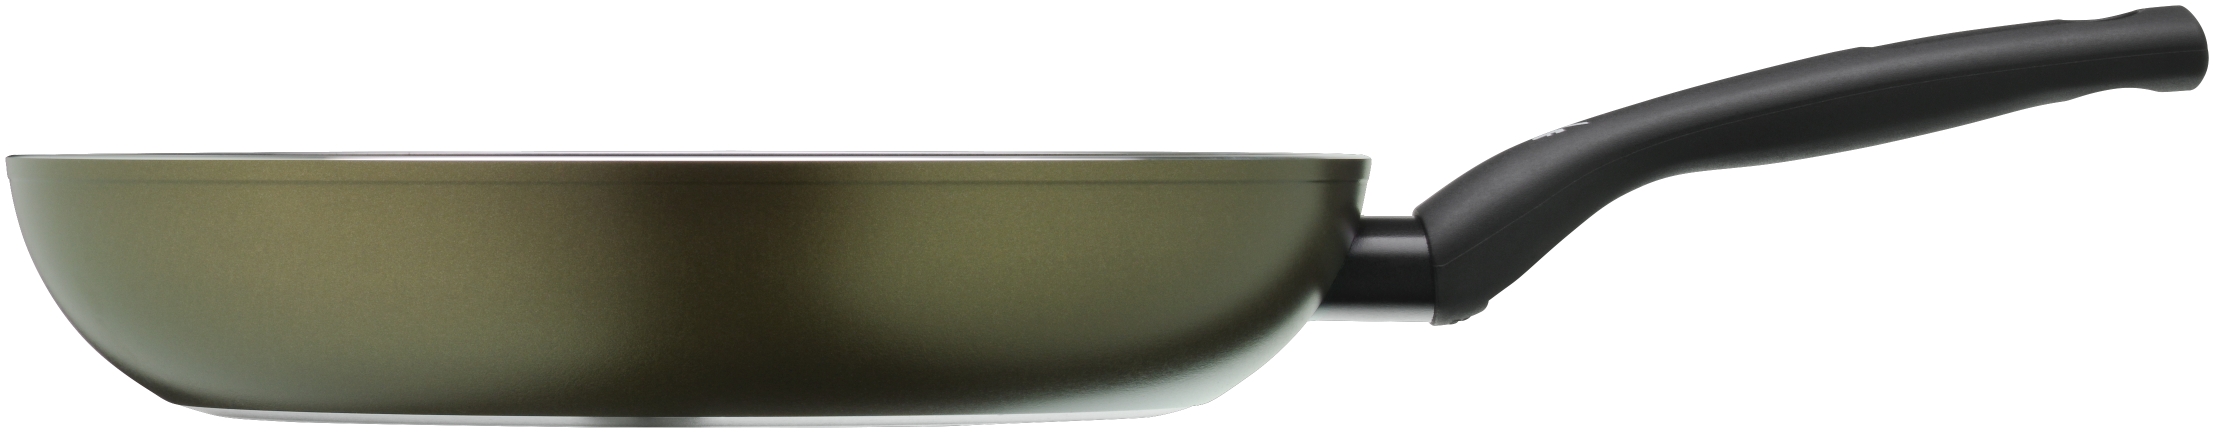 Sartén verde olivo d 28 cm permadur element wmf - SKU: WMF 05 4528